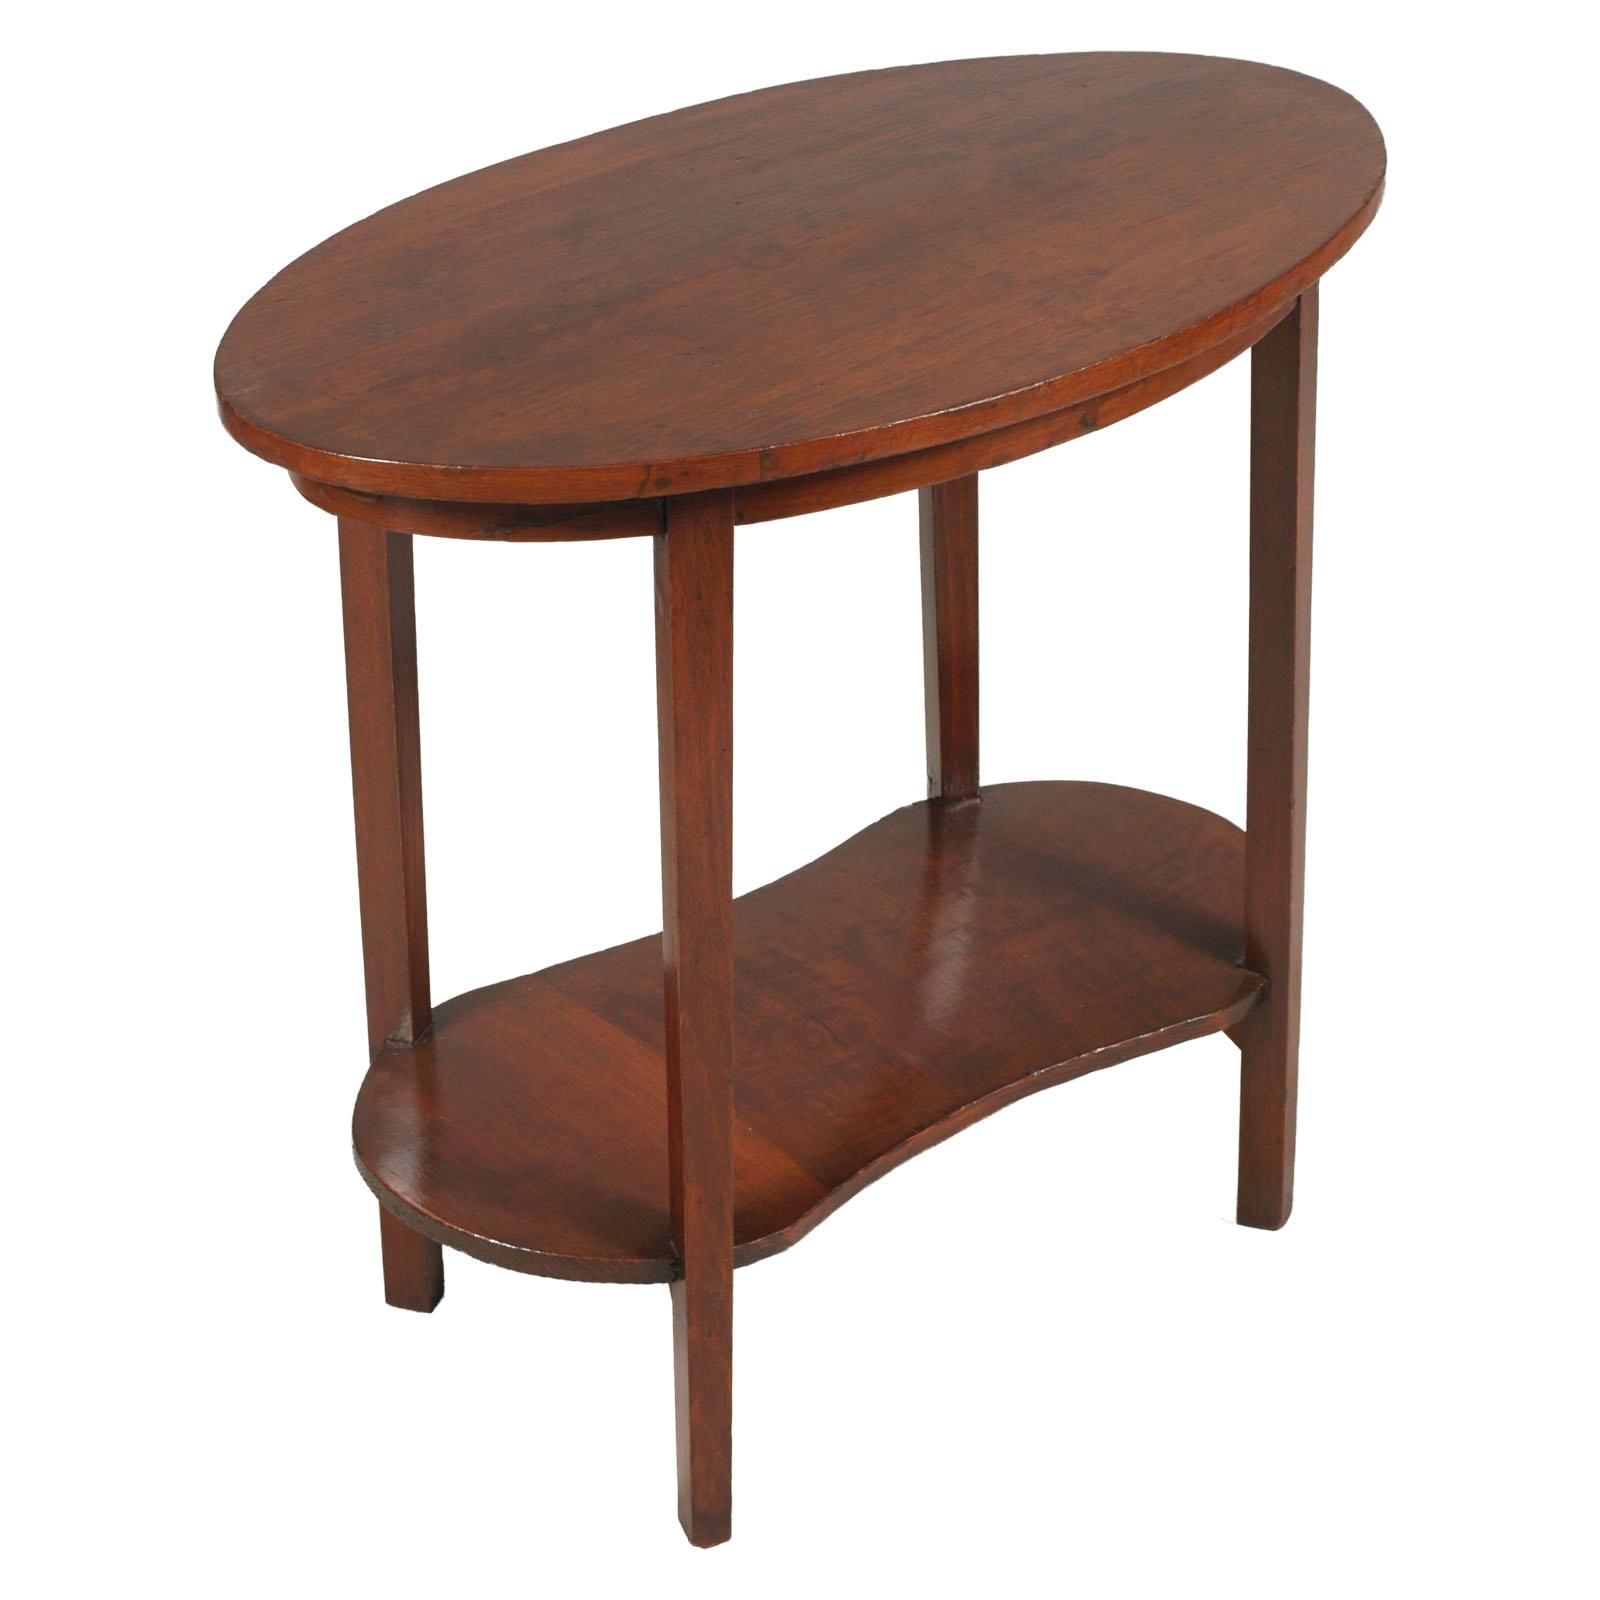 Early 20th Century Small Side Table, Art Nouveau, Wienner Werkstatte manner